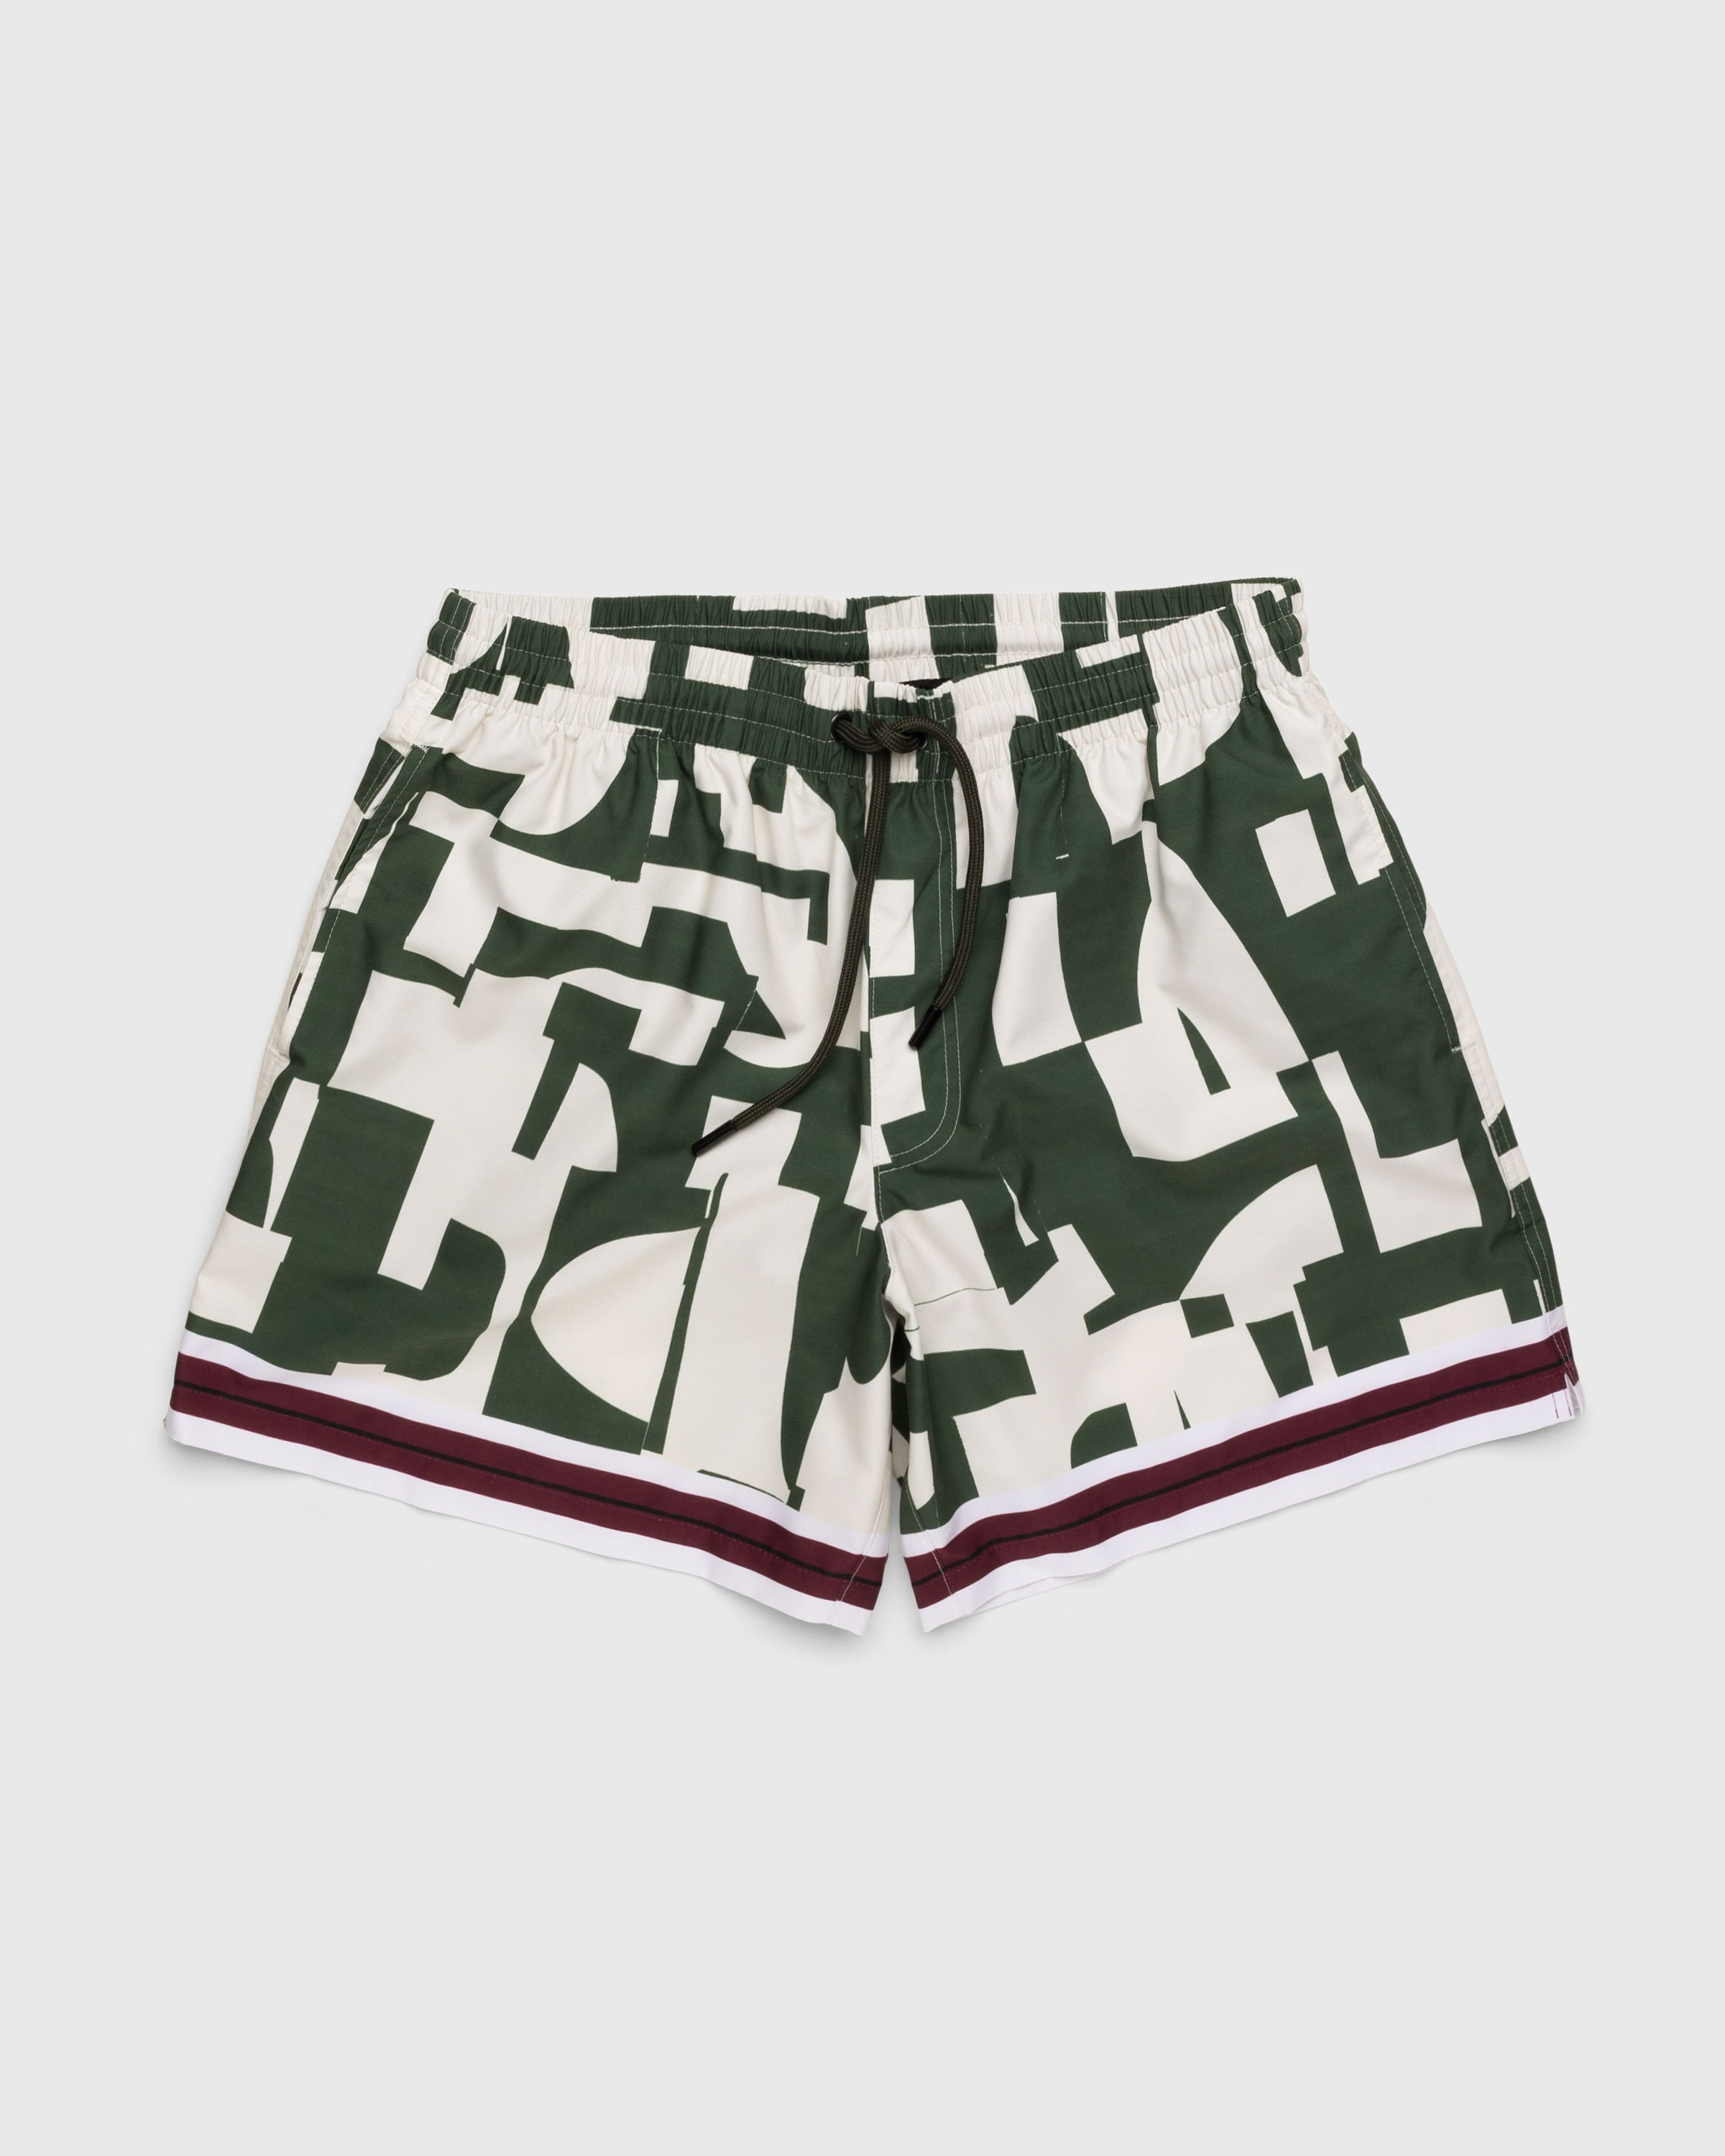 Dries van Noten - Phibbs Swim Shorts Dessin C - Clothing - Green - Image 1